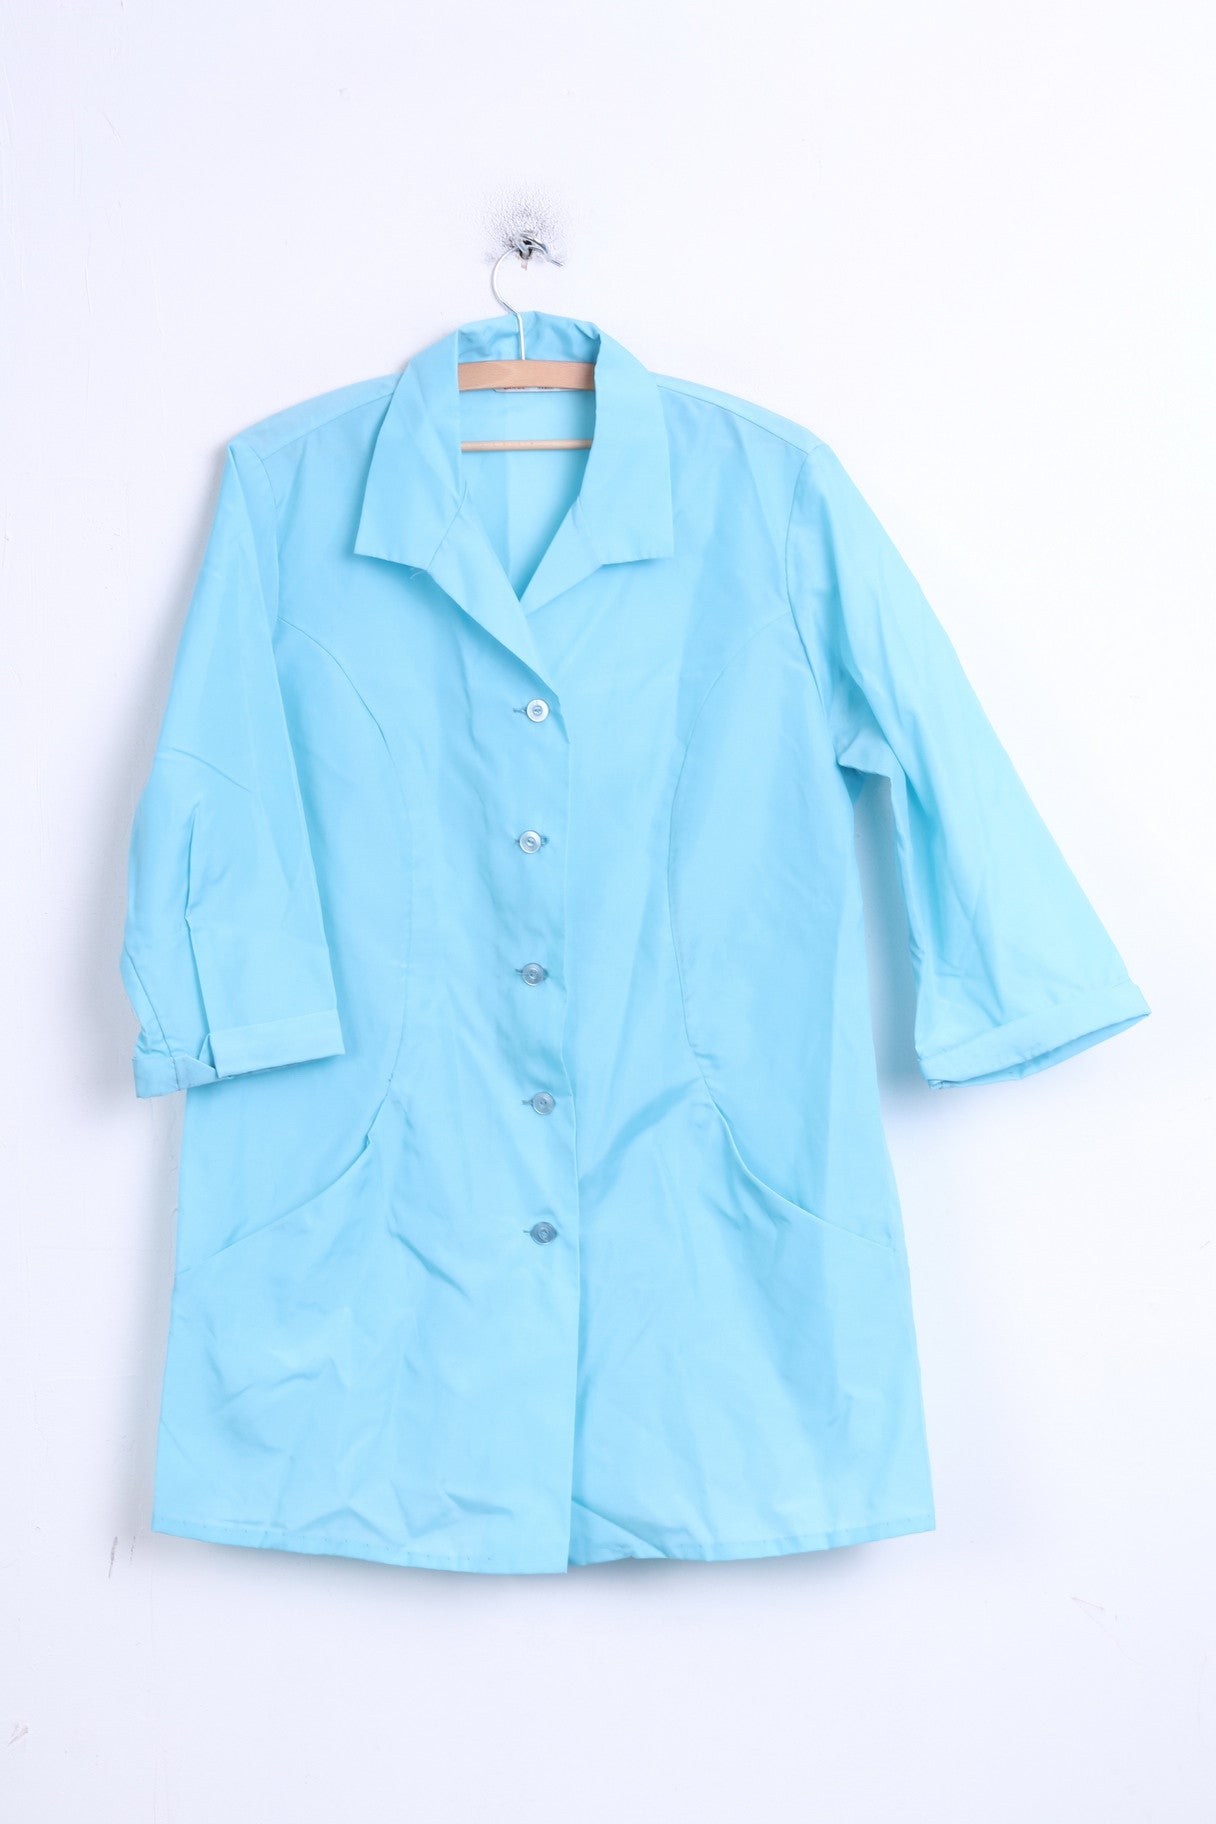 St.Michael Womens L Jacket Single Breasted Light Blue Nylon Waterproof